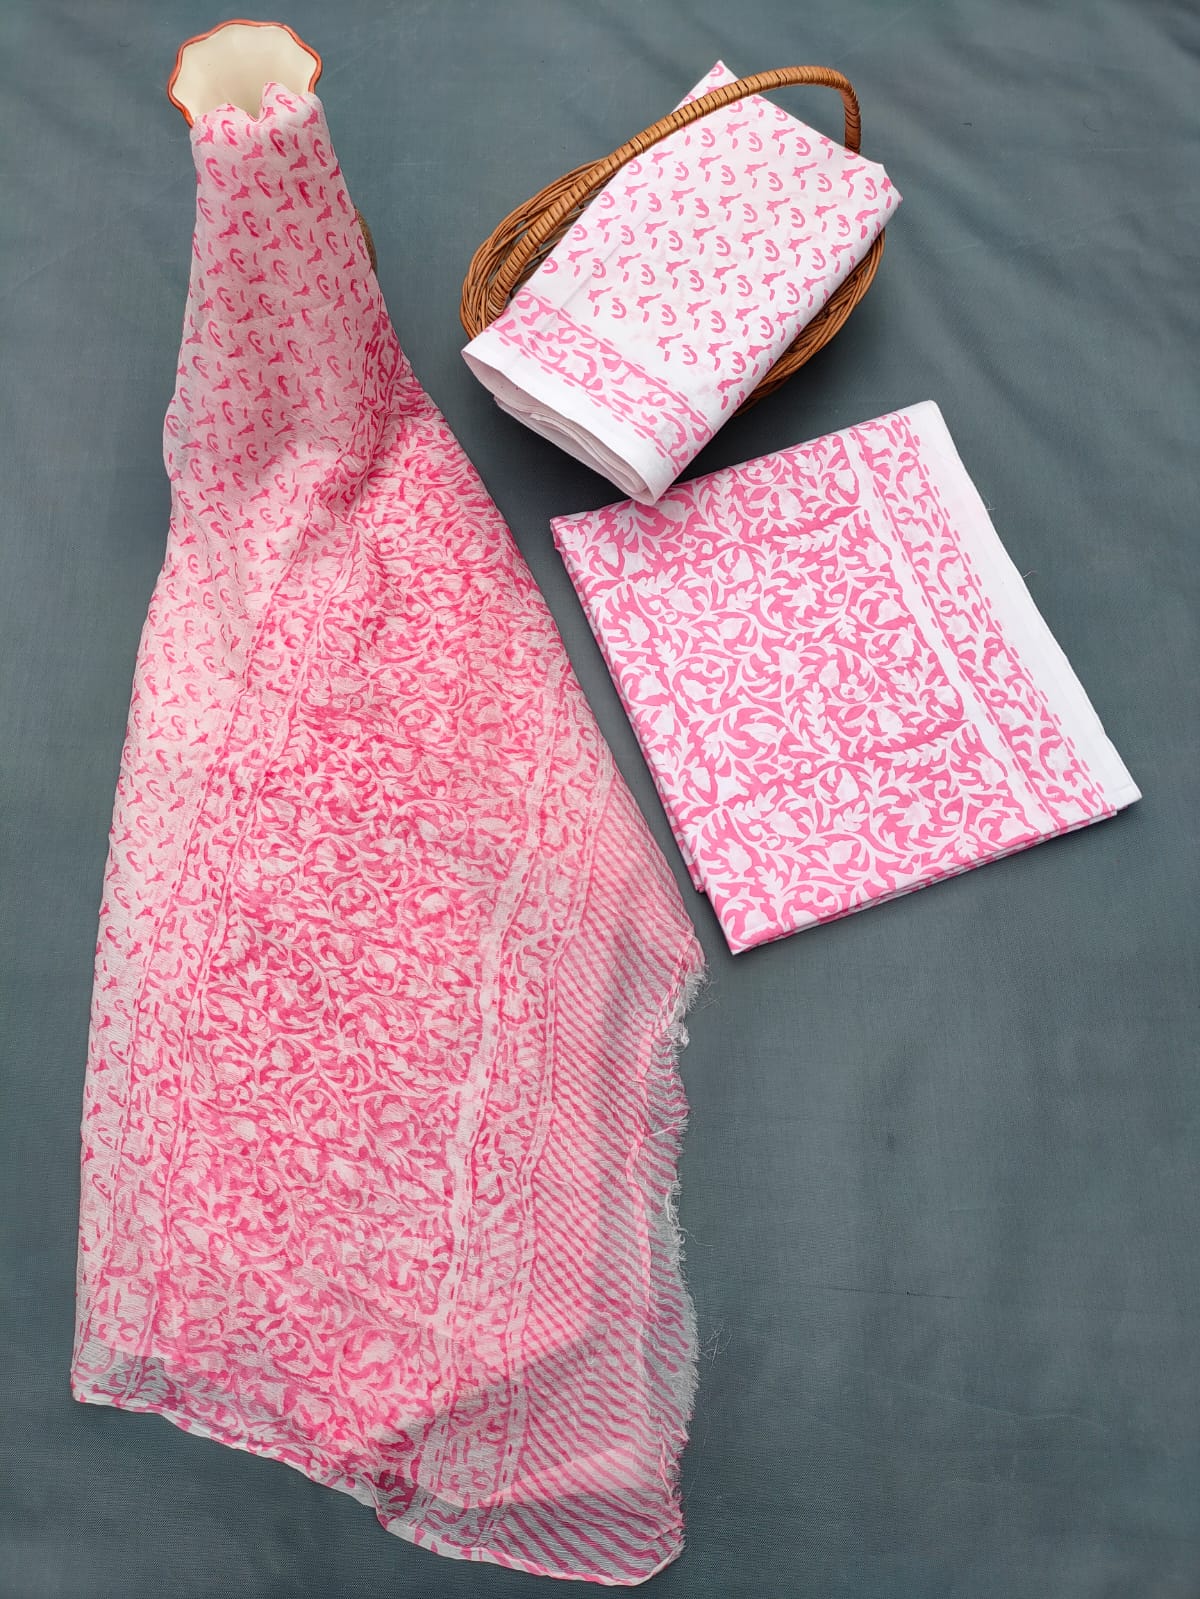 Jaipuri Unstitched Dress Material Hand Block Printed Cotton Suit With Chiffon Dupatta - JB694